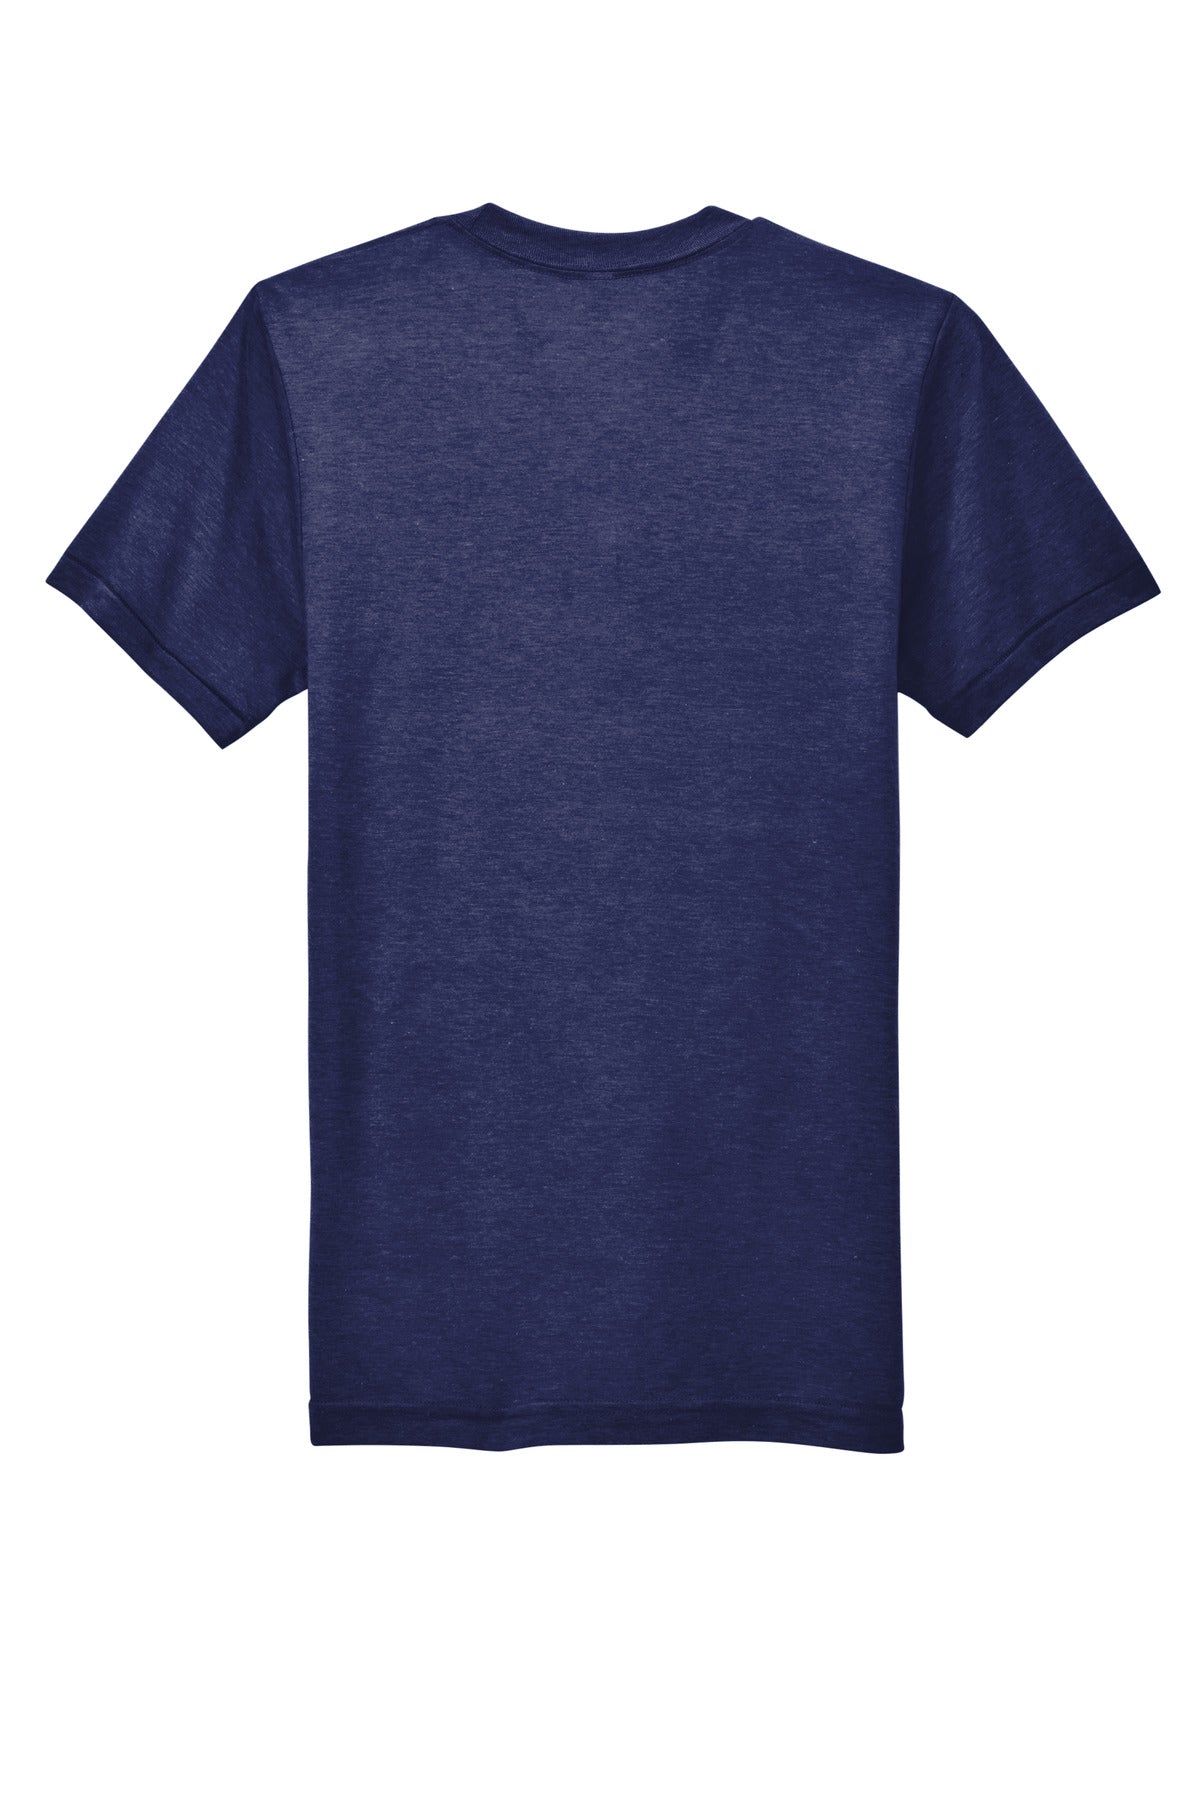 American Apparel Tri-Blend Short Sleeve Track T-Shirt. TR401W